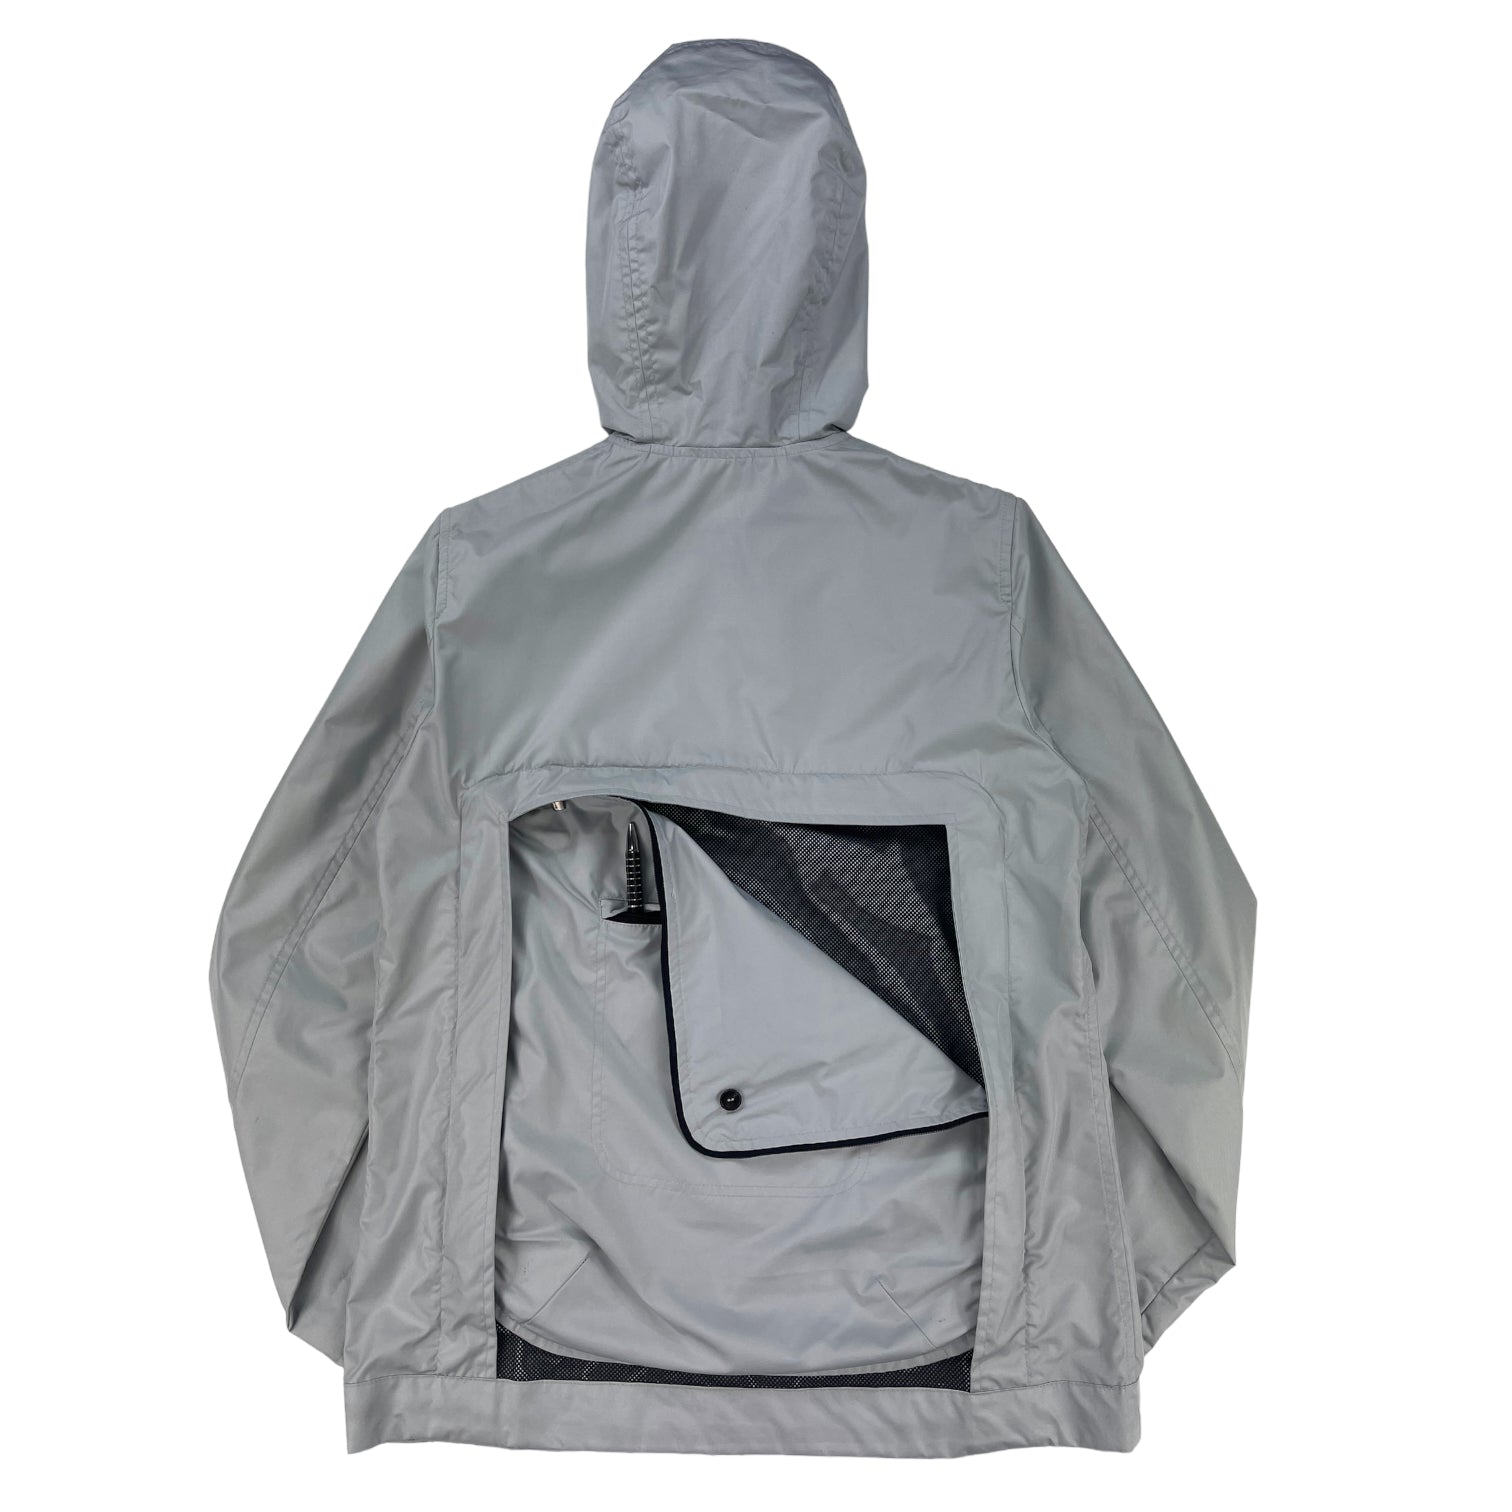 2000s Samsonite Travel Wear Modular Packable jacket by Neil Barrett